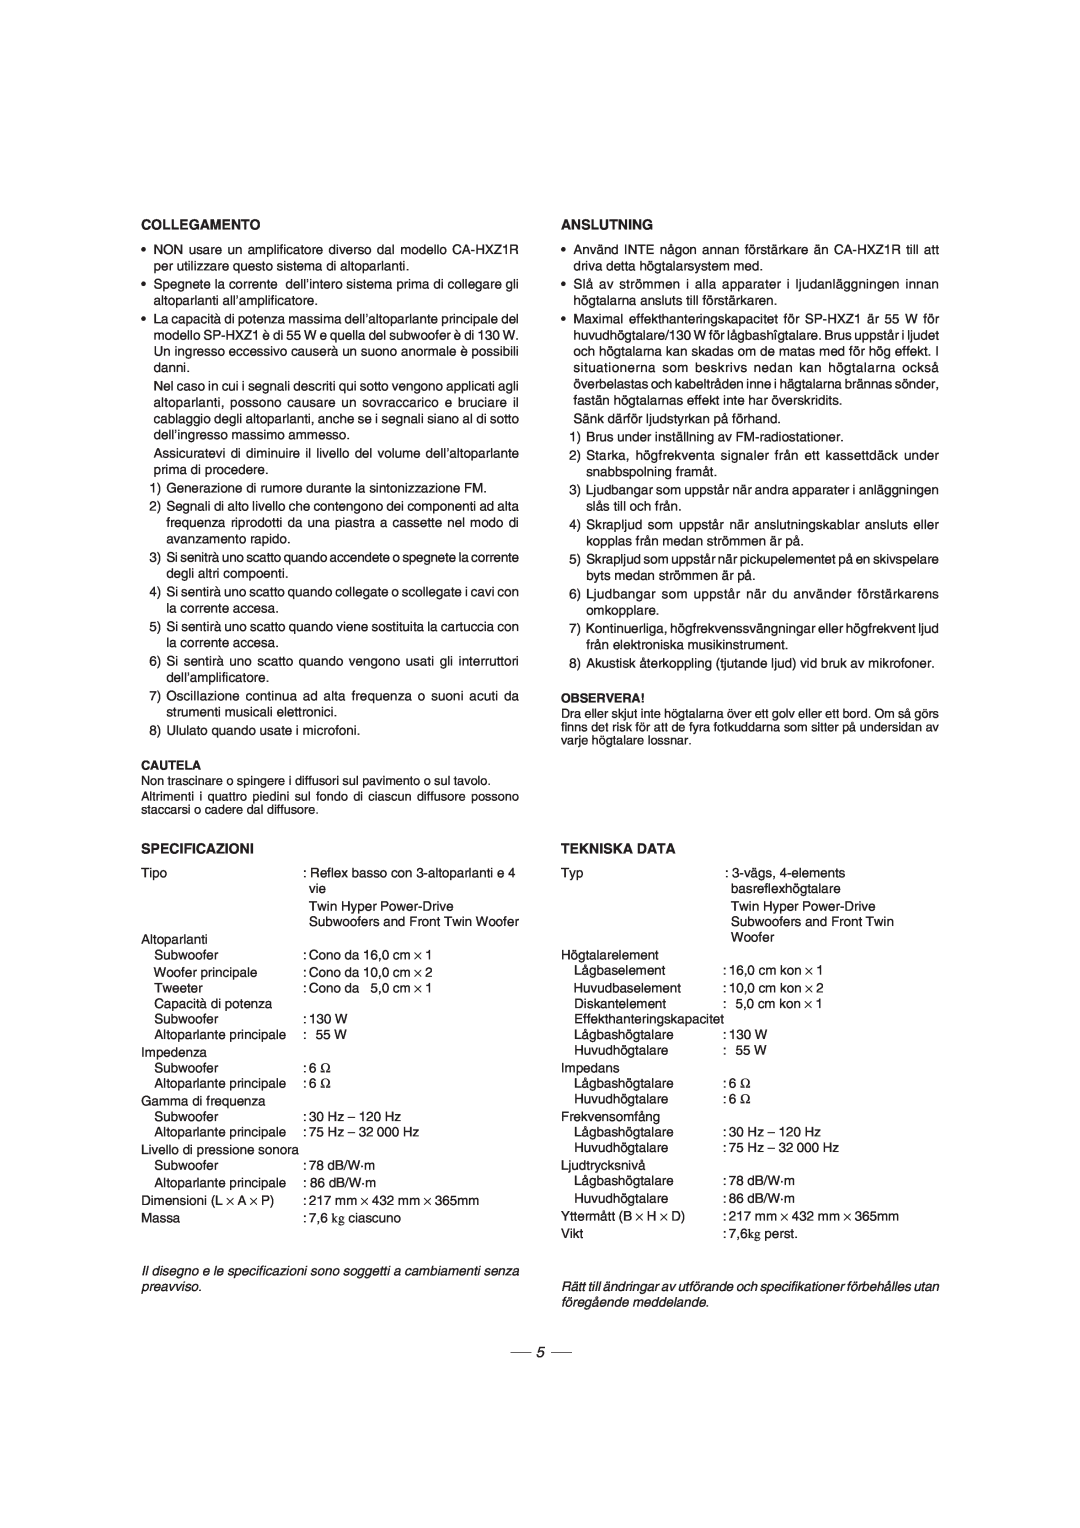 JVC GVT0077-008A manual Collegamento, Anslutning, Specificazioni, Tekniska Data 